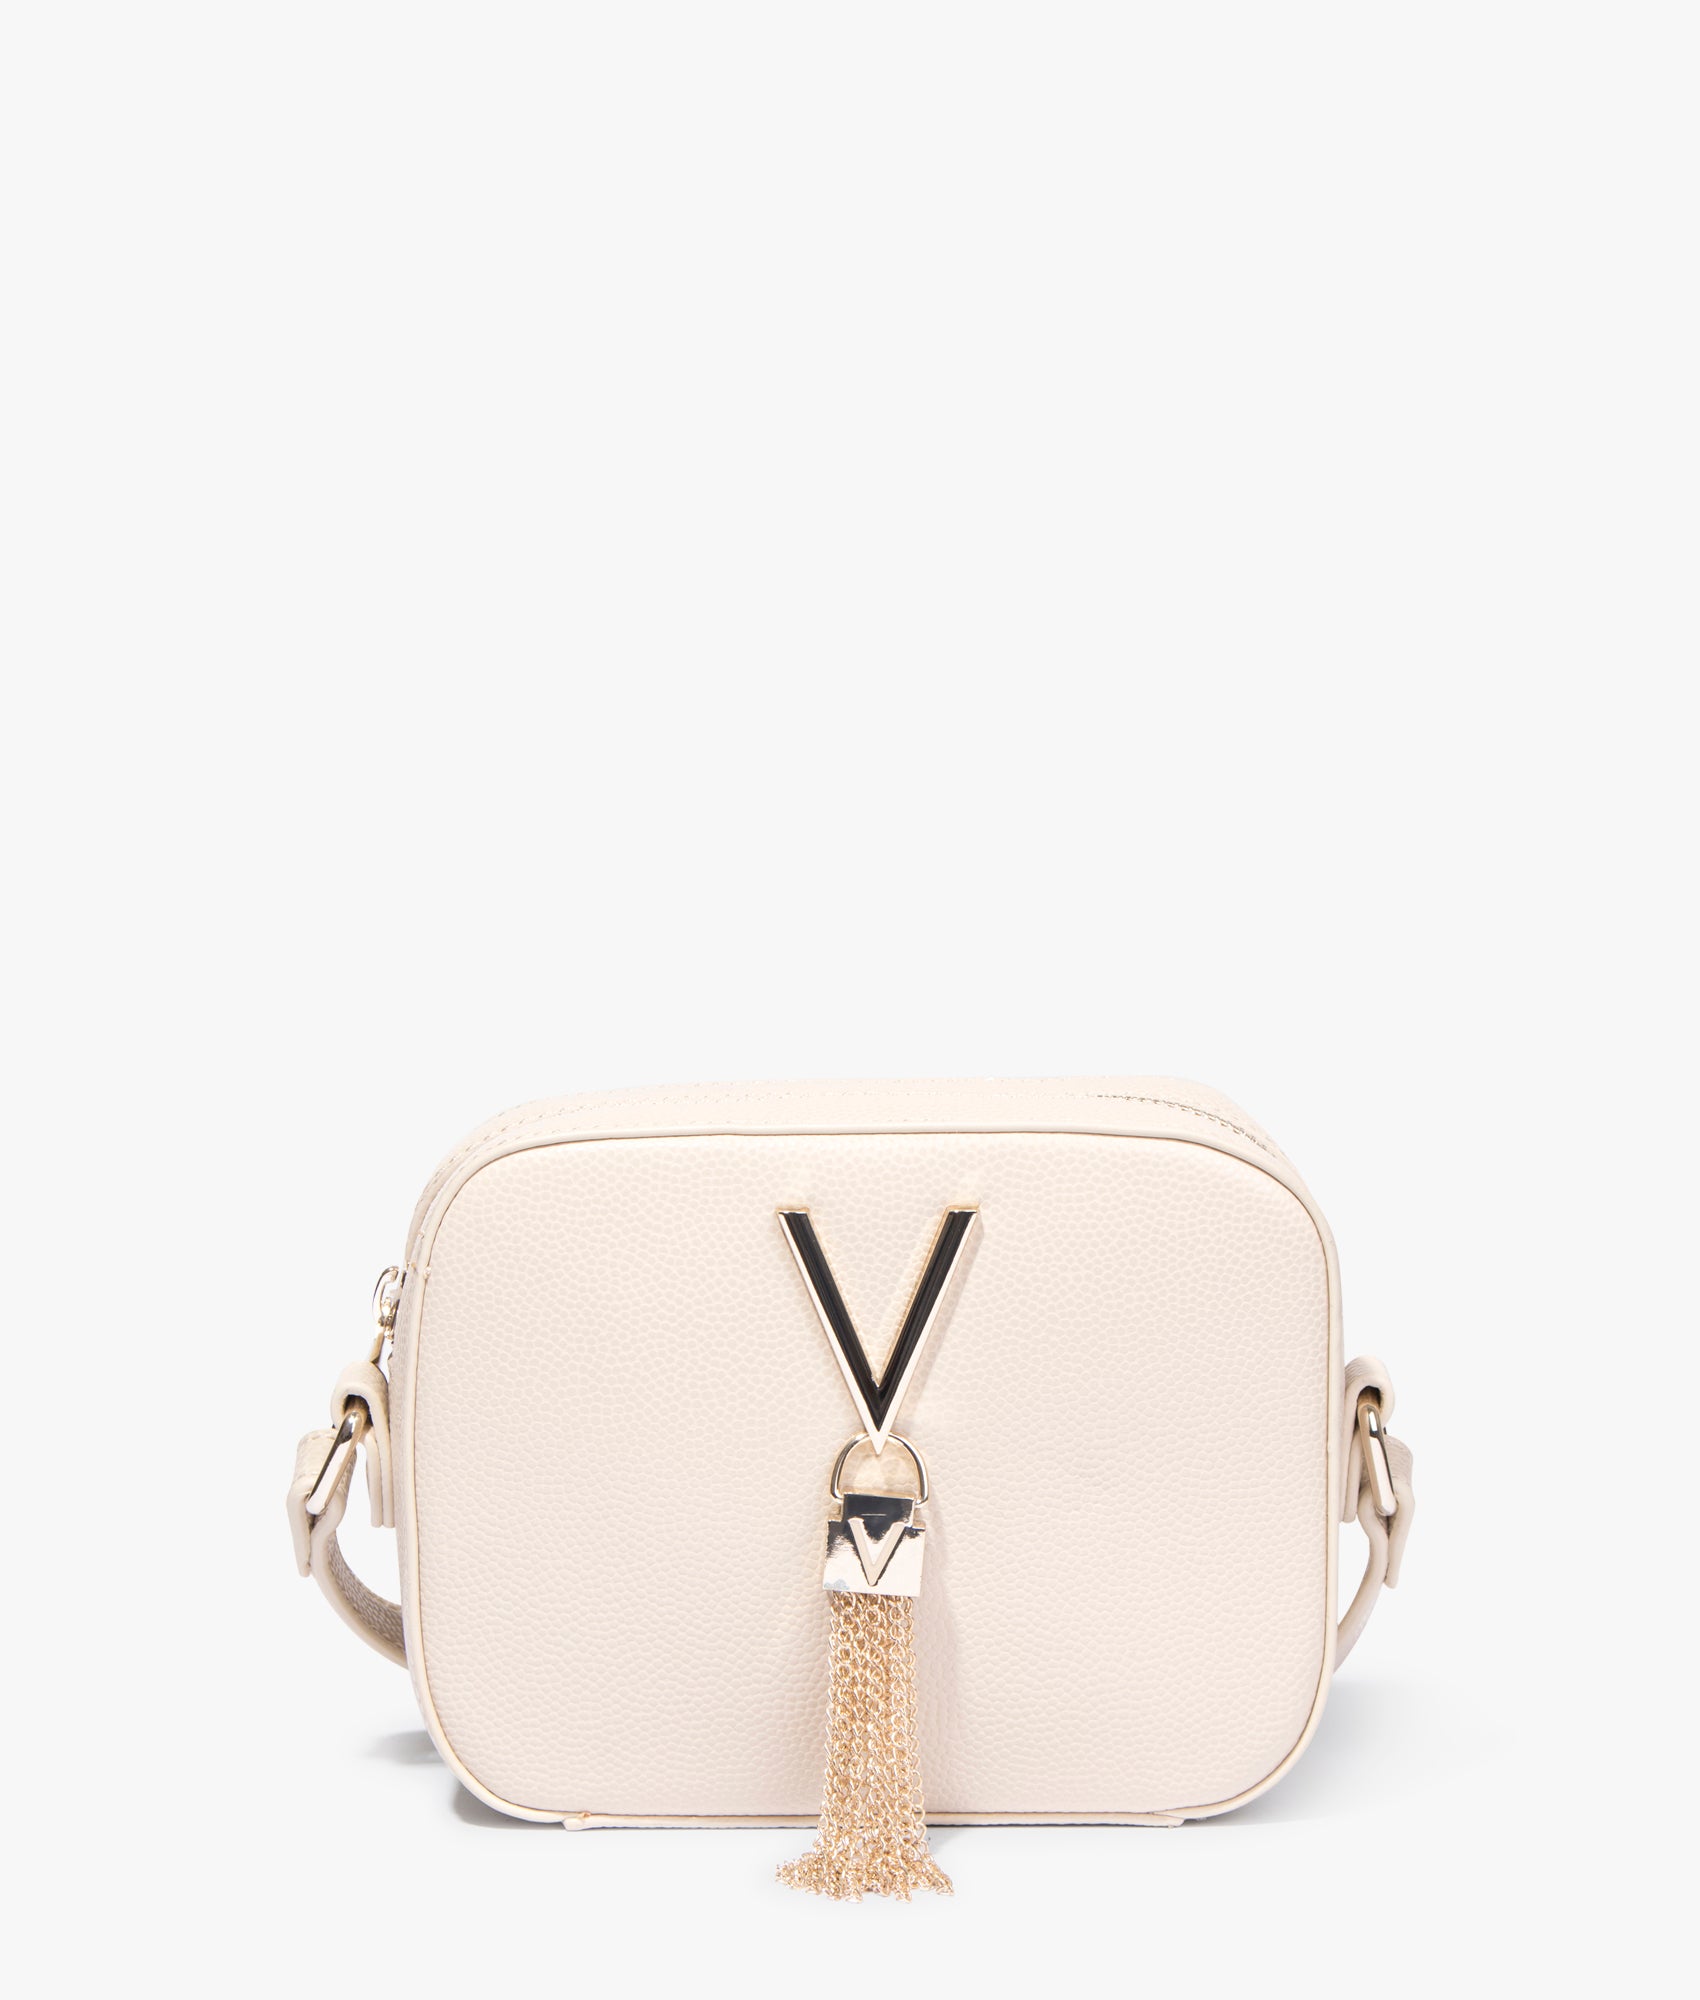 Valentino bags | Divina camera bag in beige | EQVVS Womens